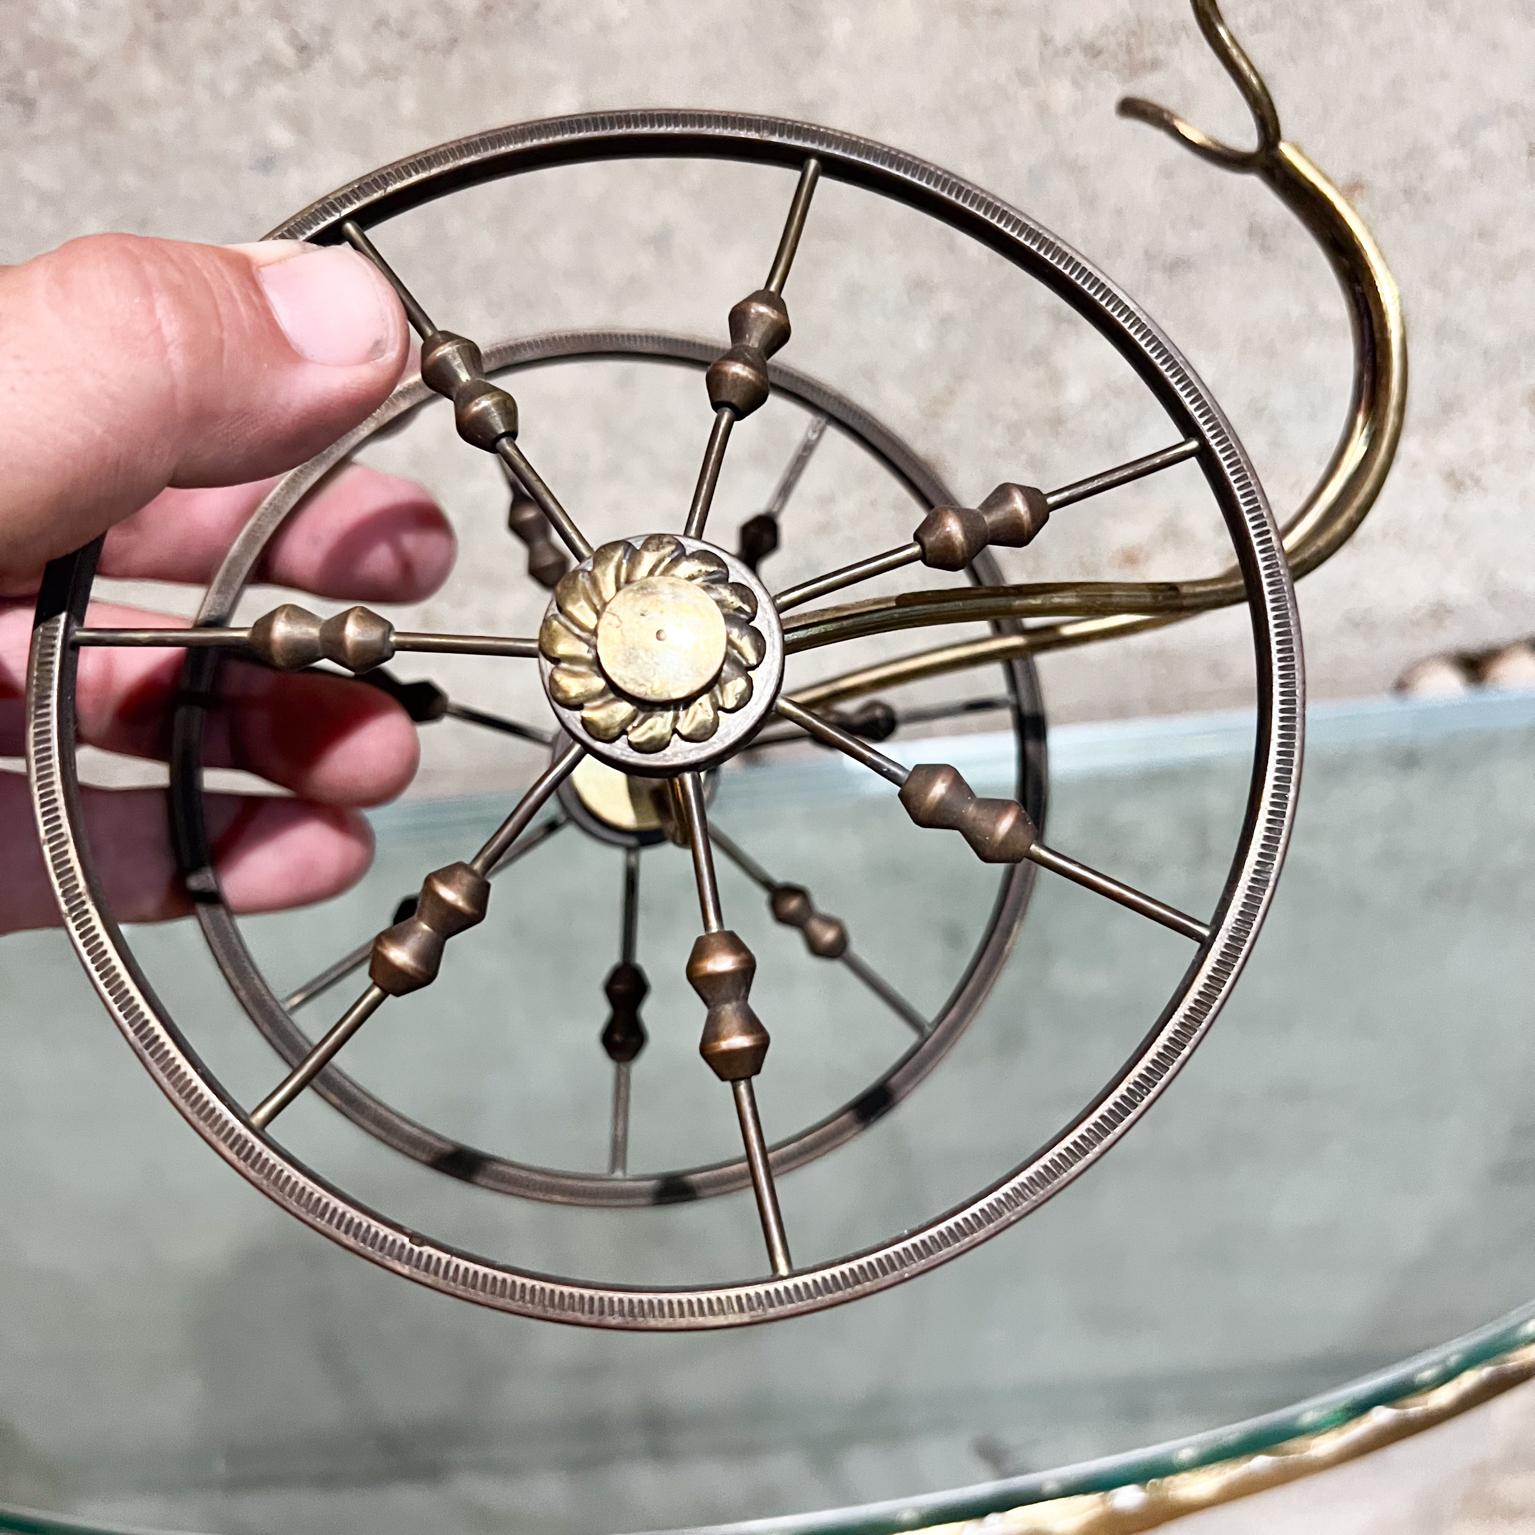 20th Century 1950s Small Wine Bottle Holder Brass Spoke Wheel made Italy For Sale